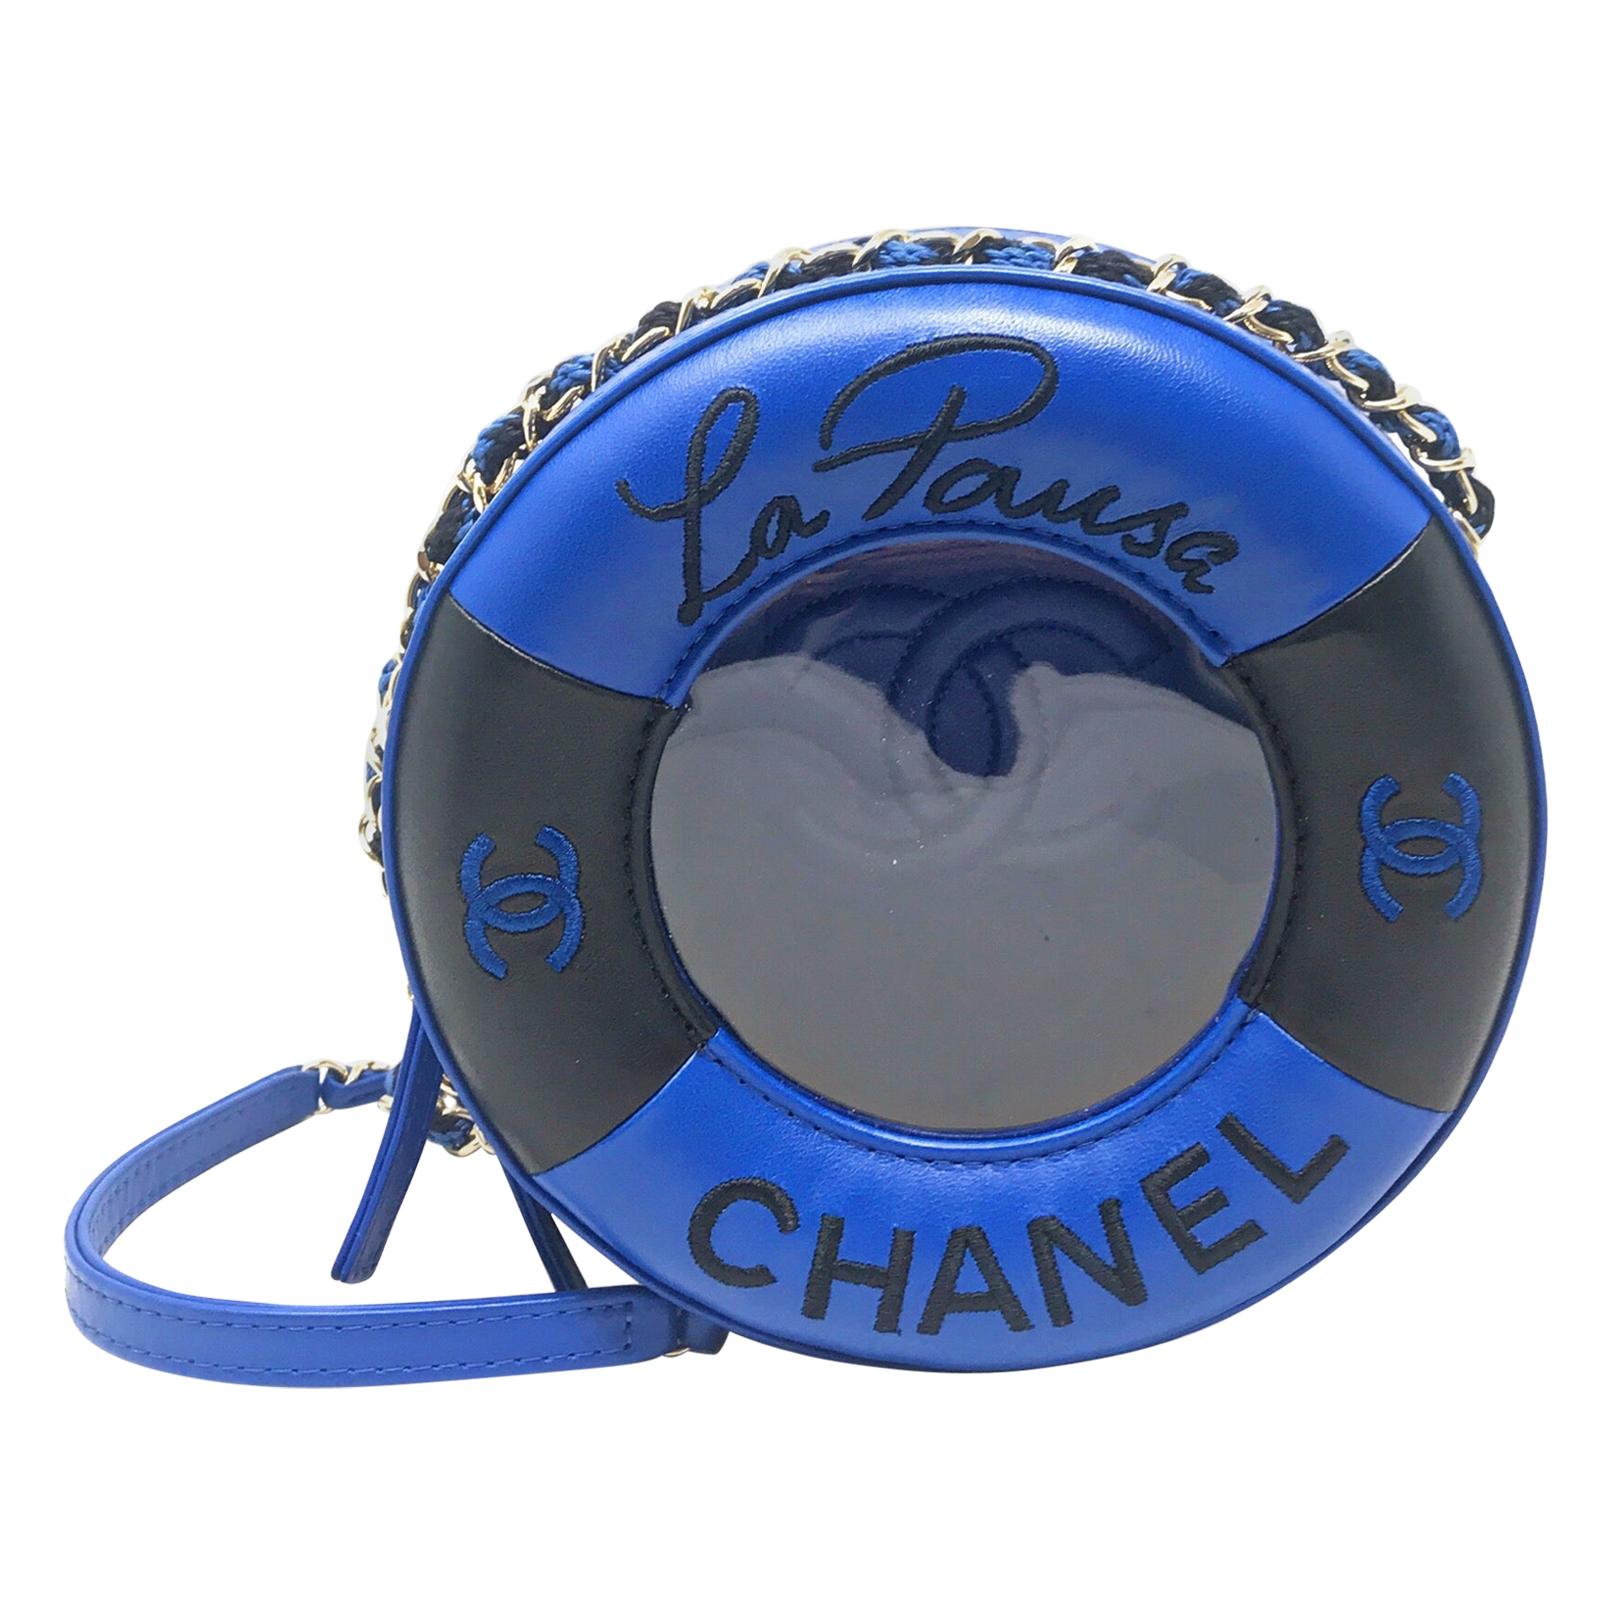 Chanel Paris Coco Lifesaver Round Bag Black, Blue, 2018 